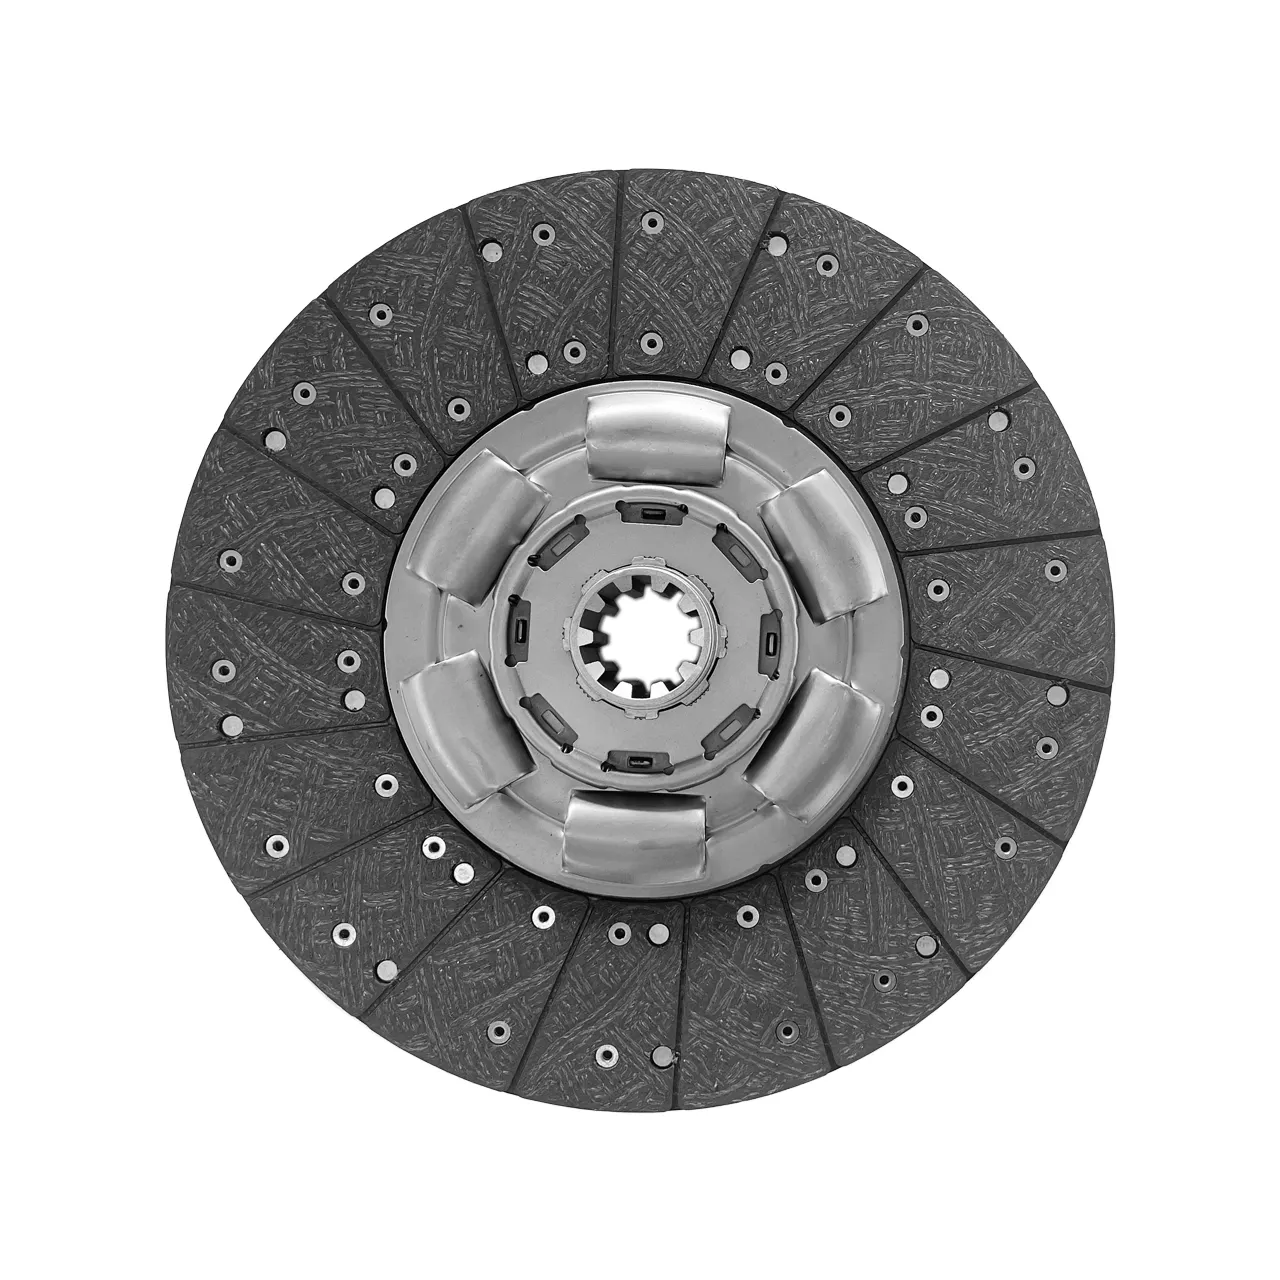 430 Clutch Disc for Man Maz Mercedes-Benz Truck Engine Parts 1878080031